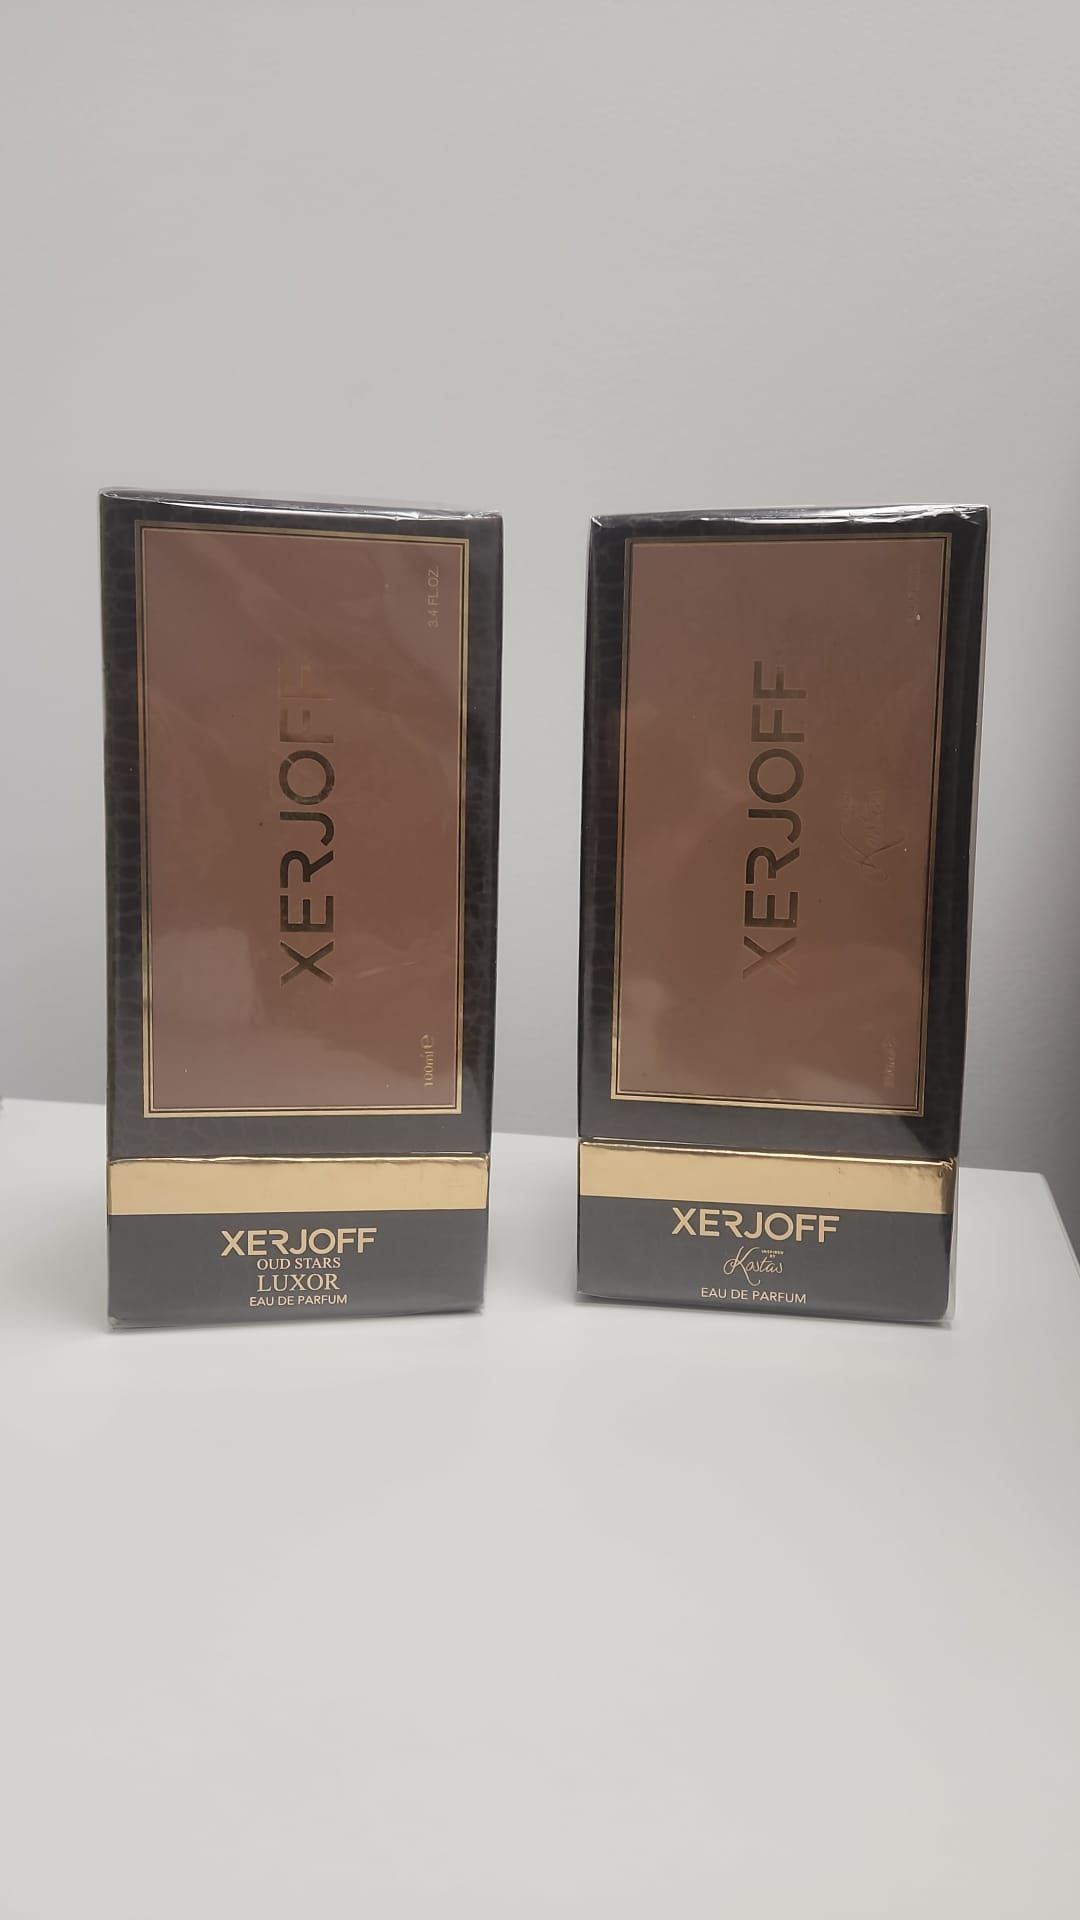 Kerjoff Oud Stars Luxor eau de parfum